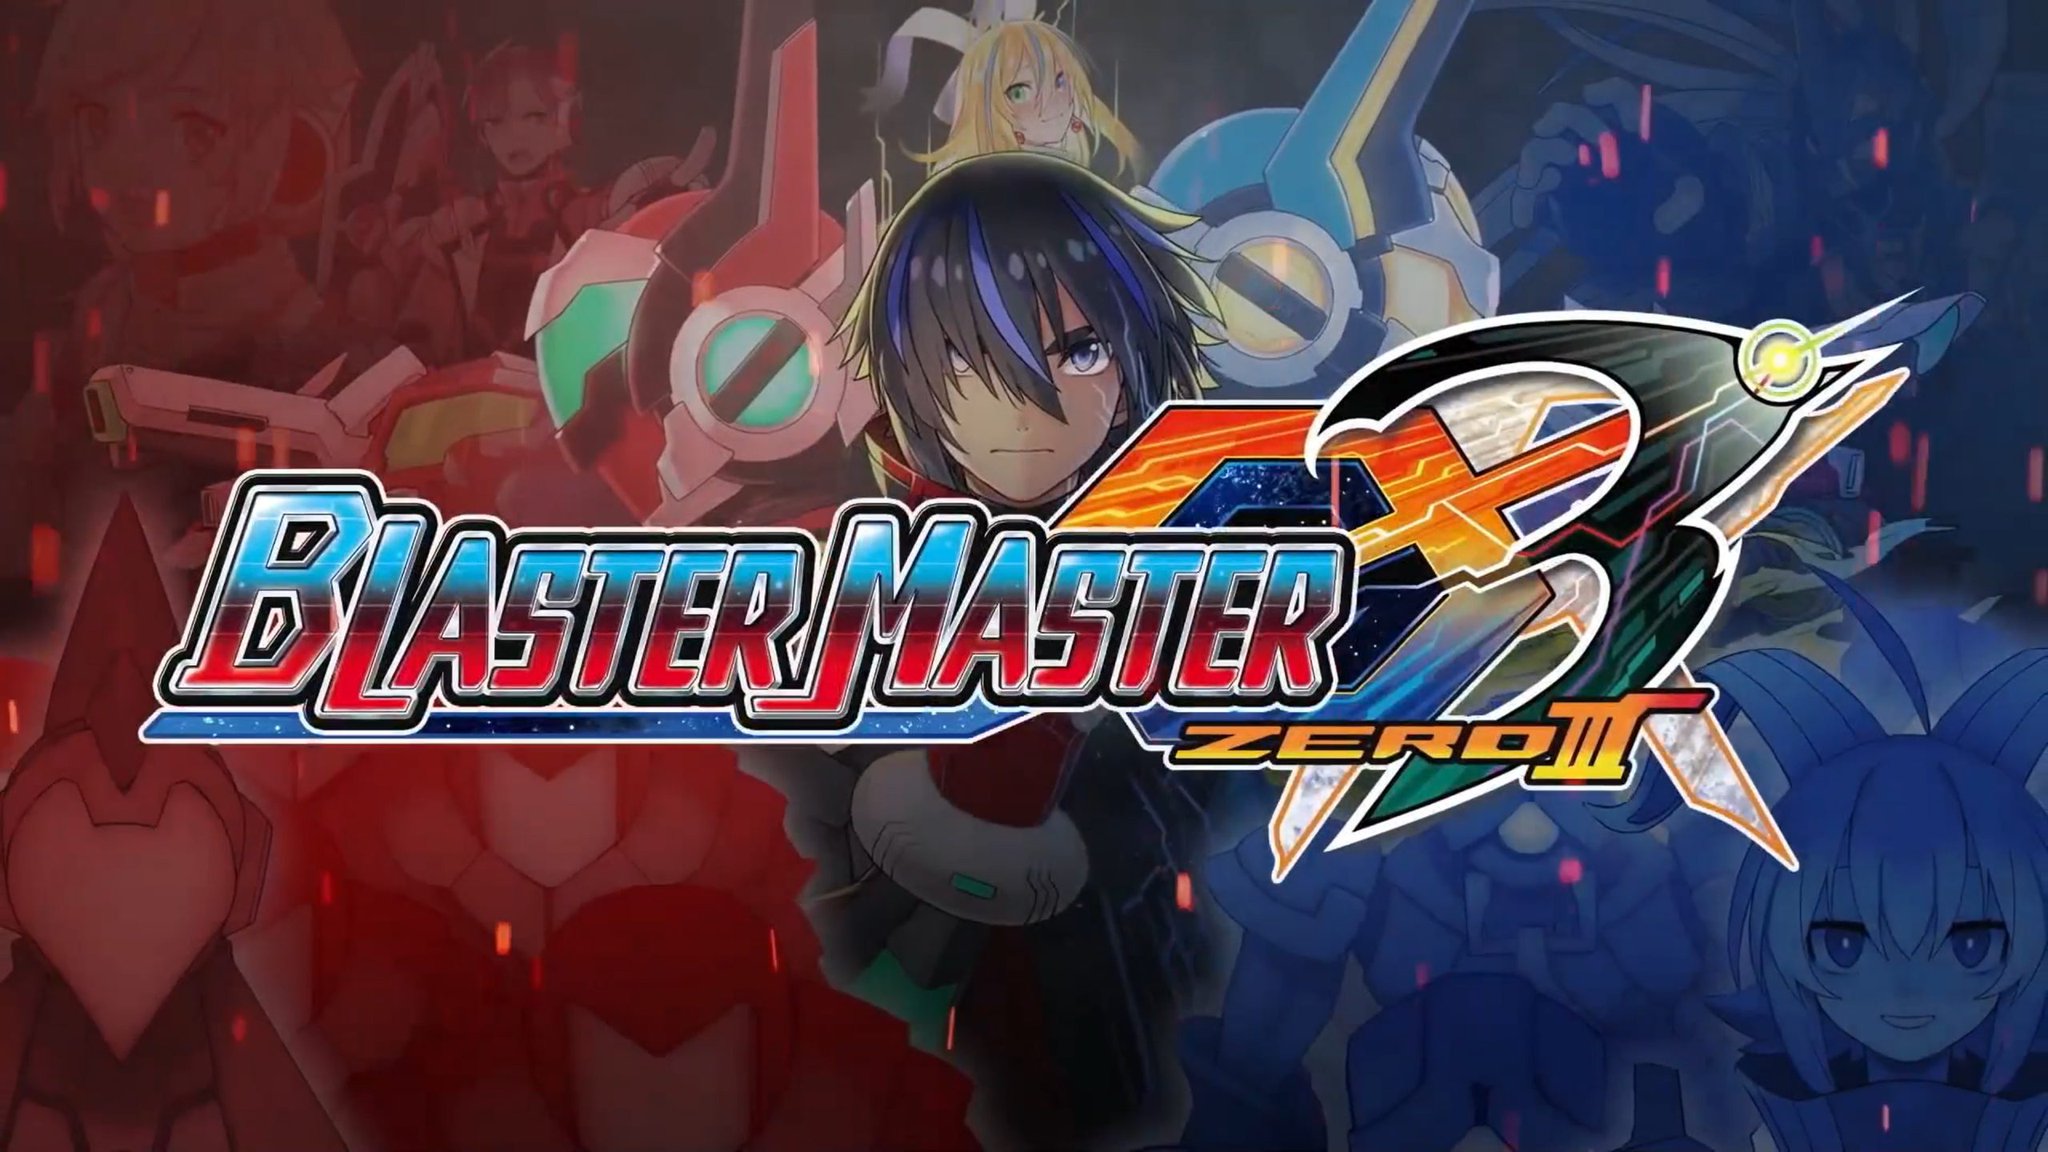 Blaster Master Zero 3 u shpall